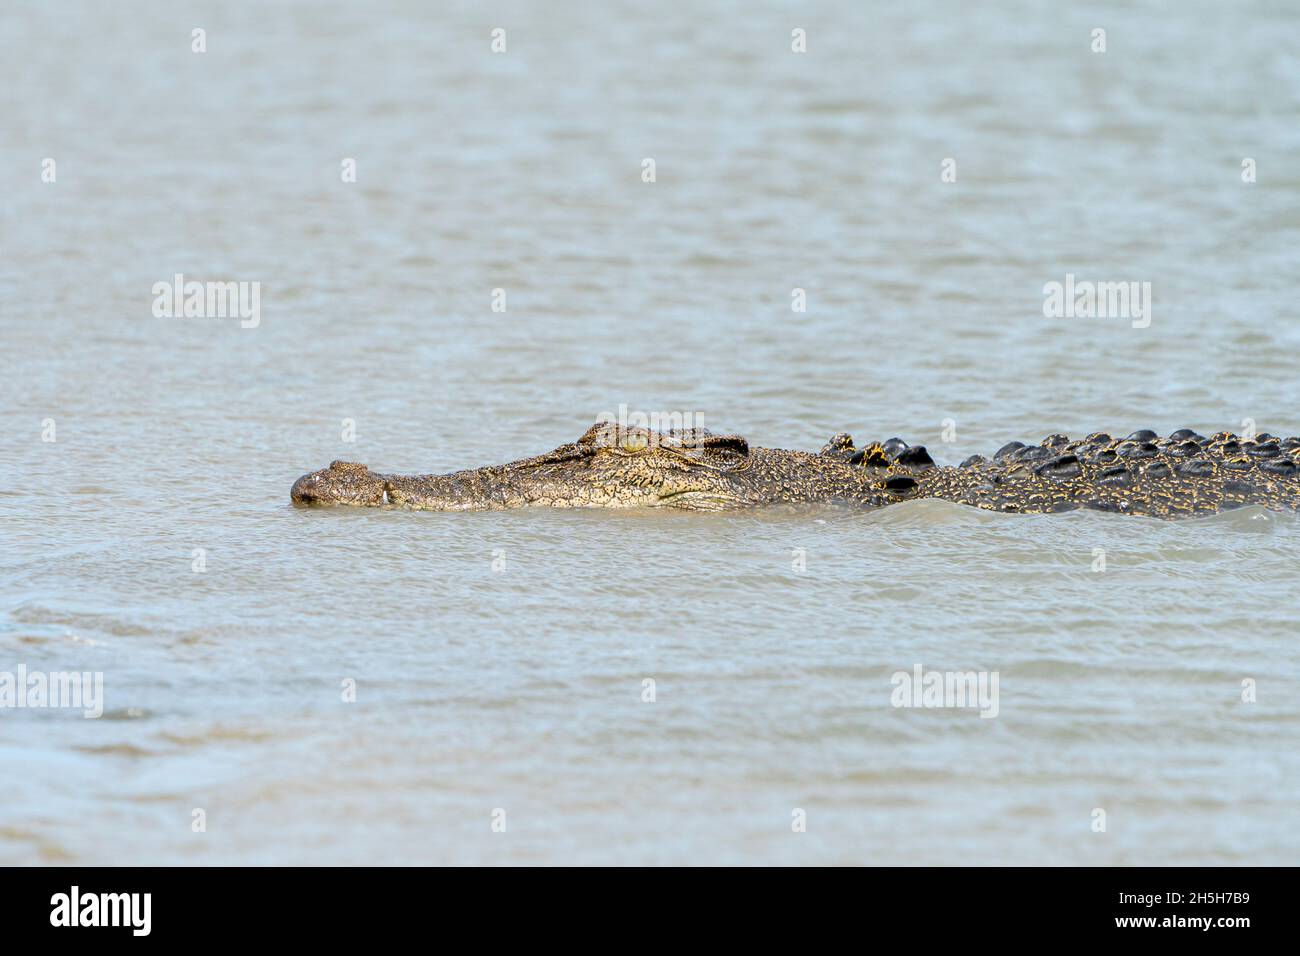 Estuarine crocodile or saltwater crocodile (Crocodylus porosus) swimming in muddy water. North Queensland, Australia Stock Photo